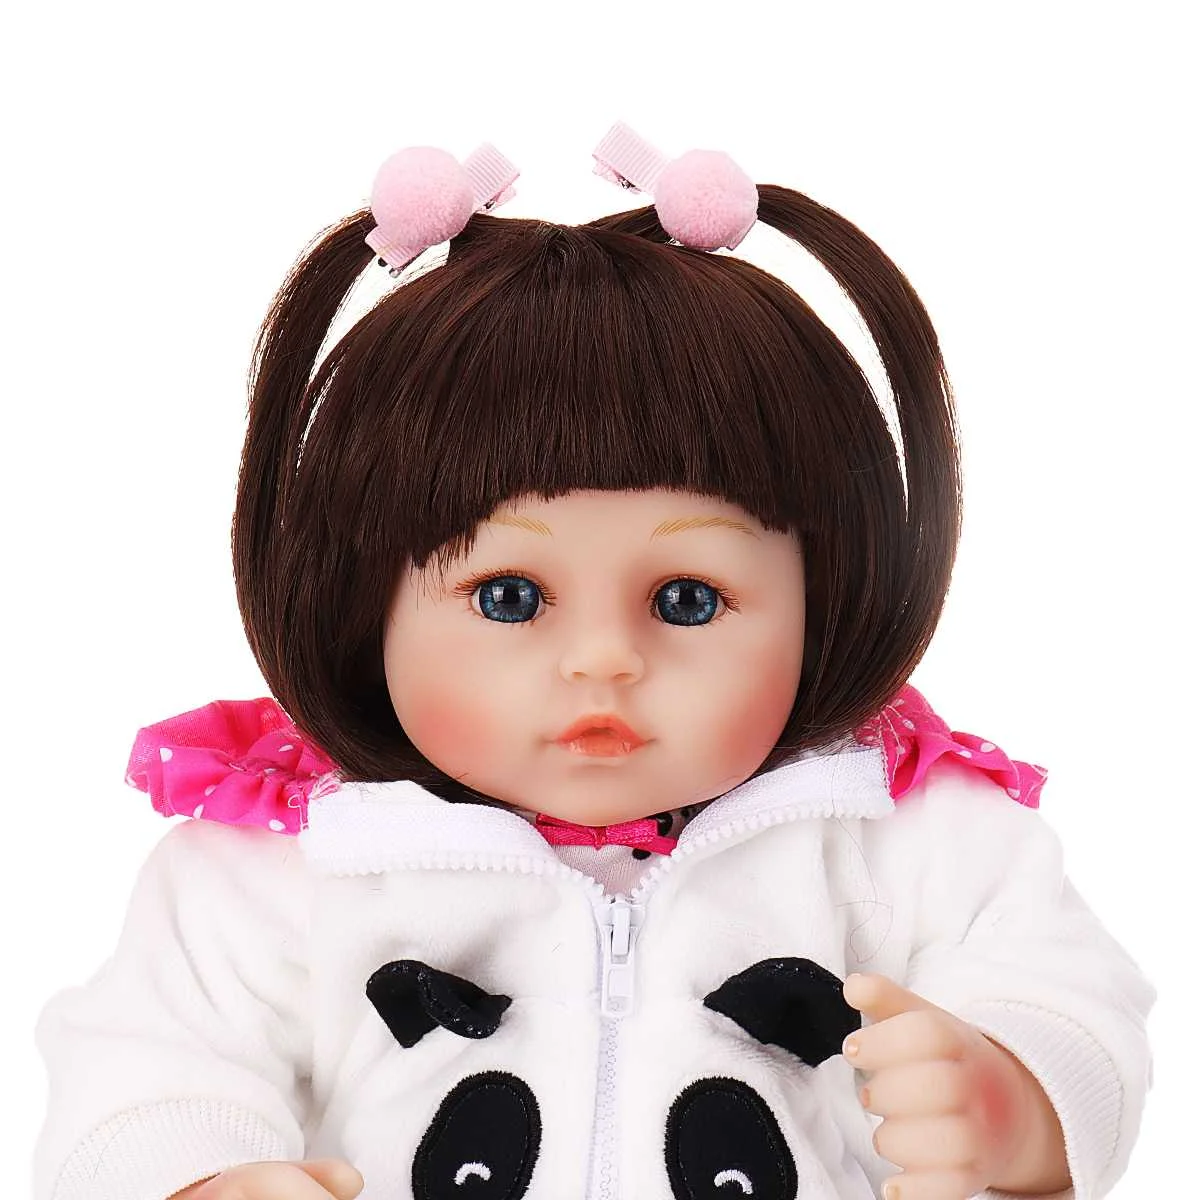 

Pickwoo 48cm bebes reborn doll Baby girl Dolls soft Silicone Boneca Reborn Brinquedos Bonecas children's toys bed time plamate